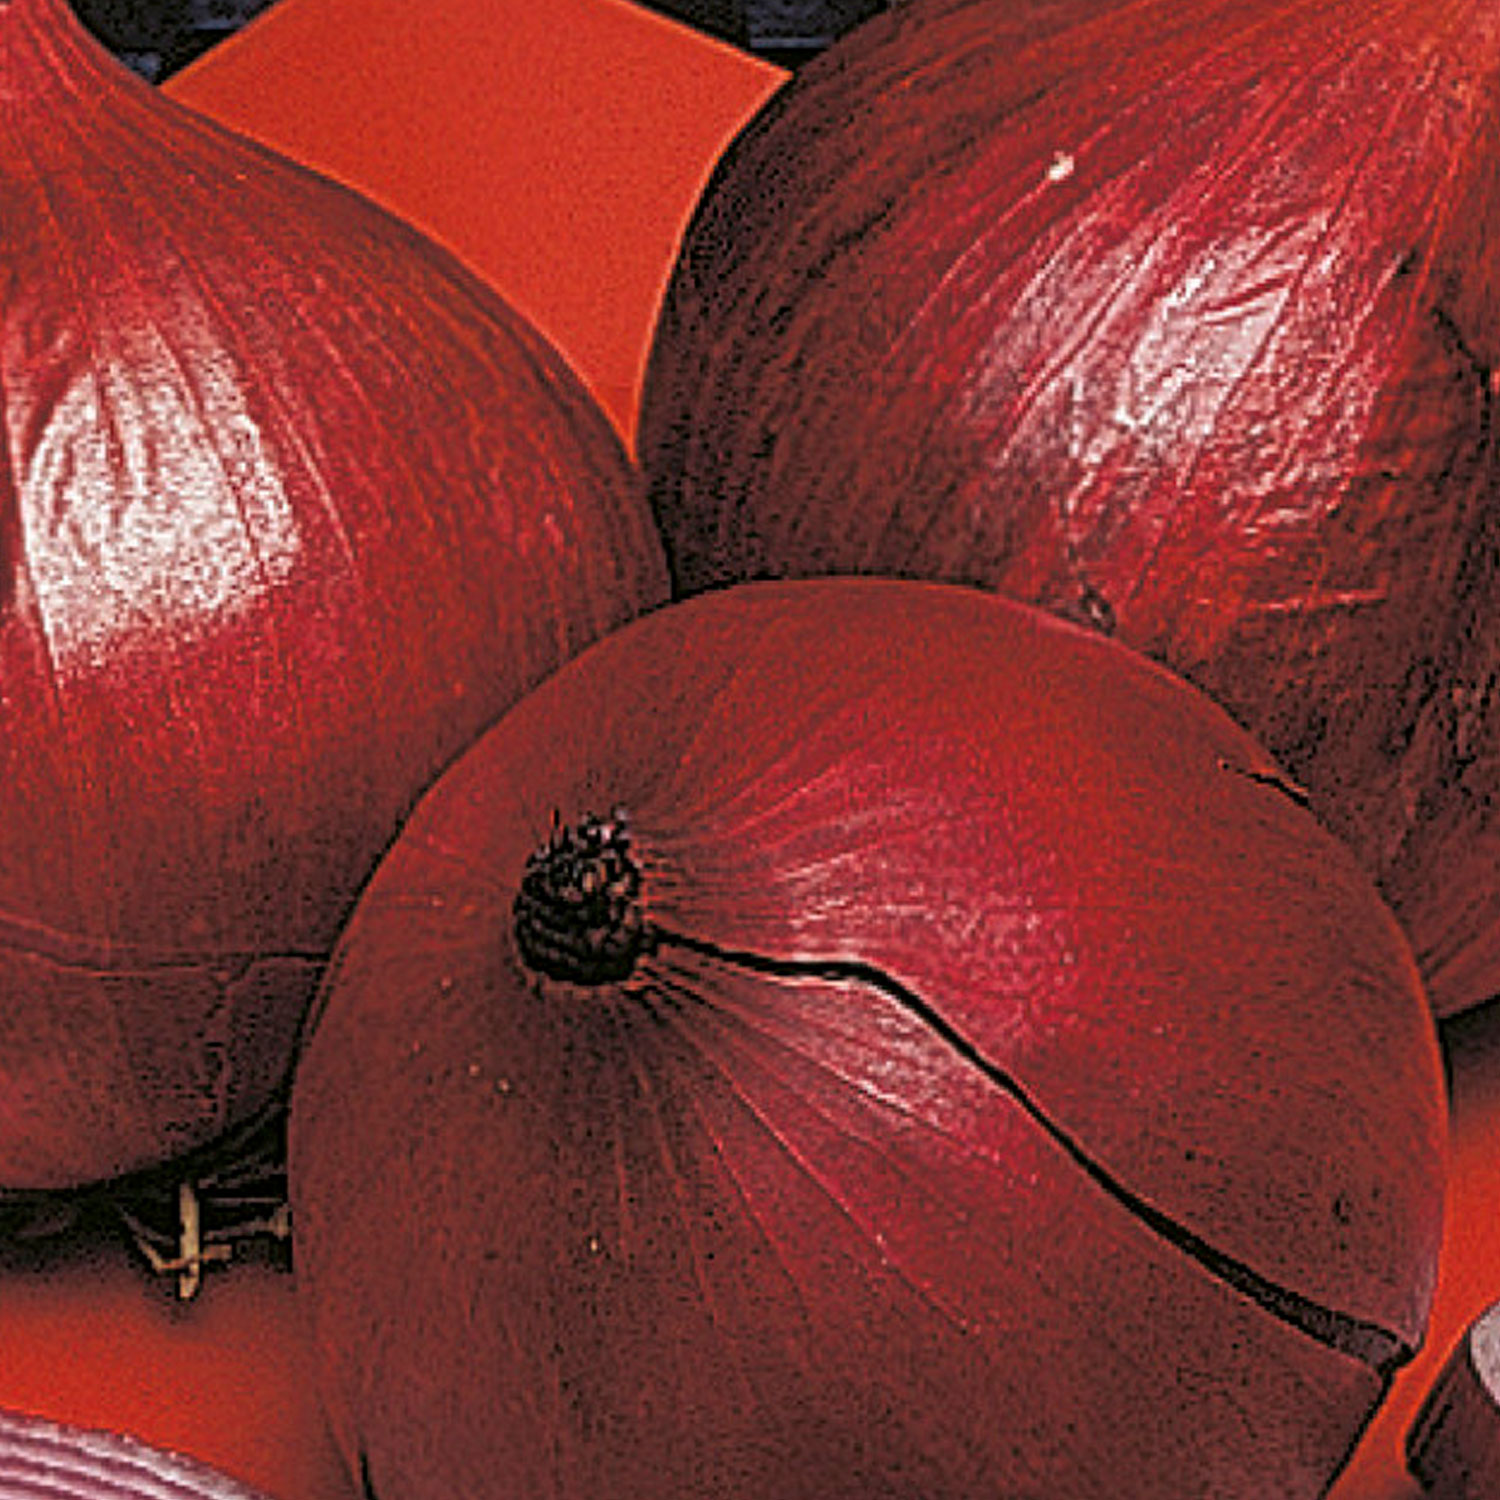 Johnsons Red Baron Onion Seeds Image 1